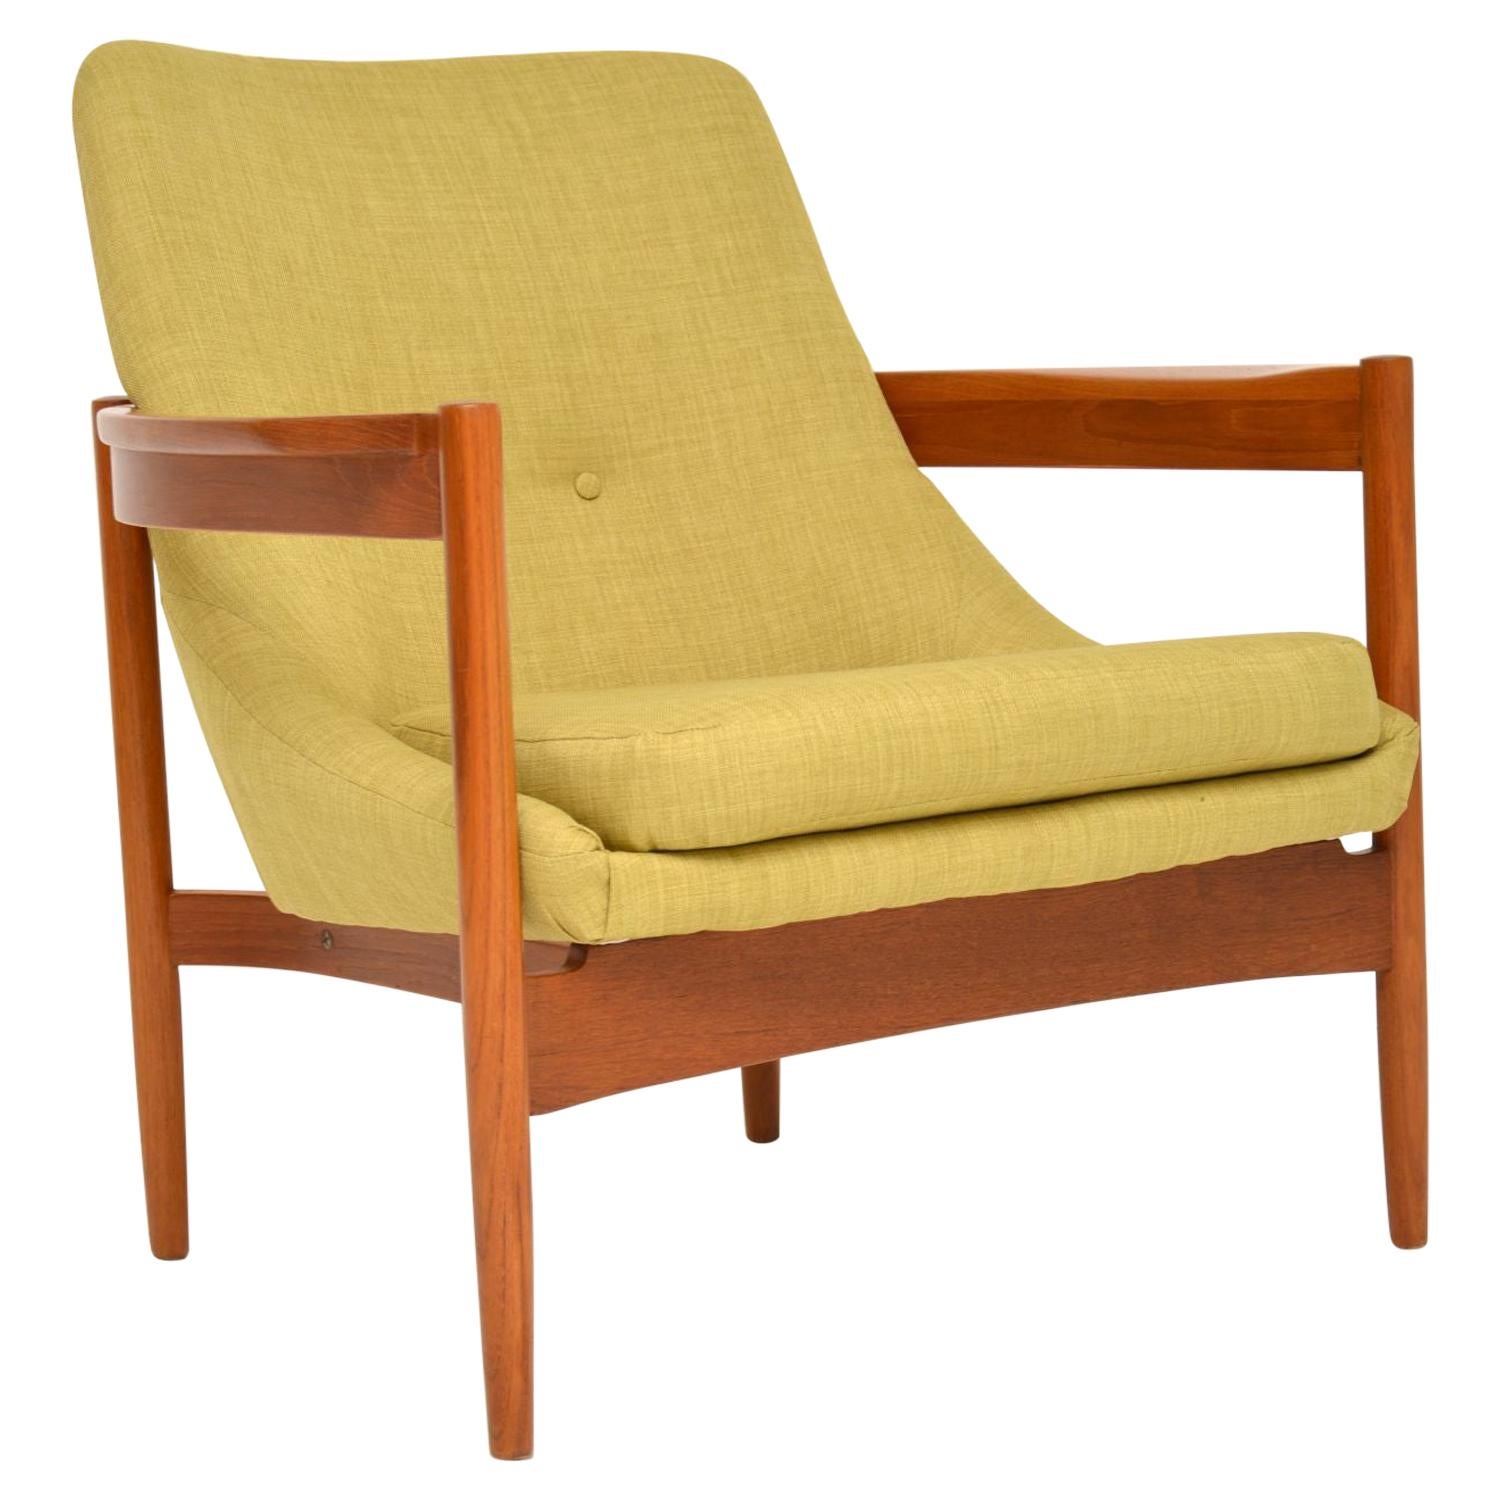 1960s Vintage Teak ‘Delta’ Armchair by Guy Rogers